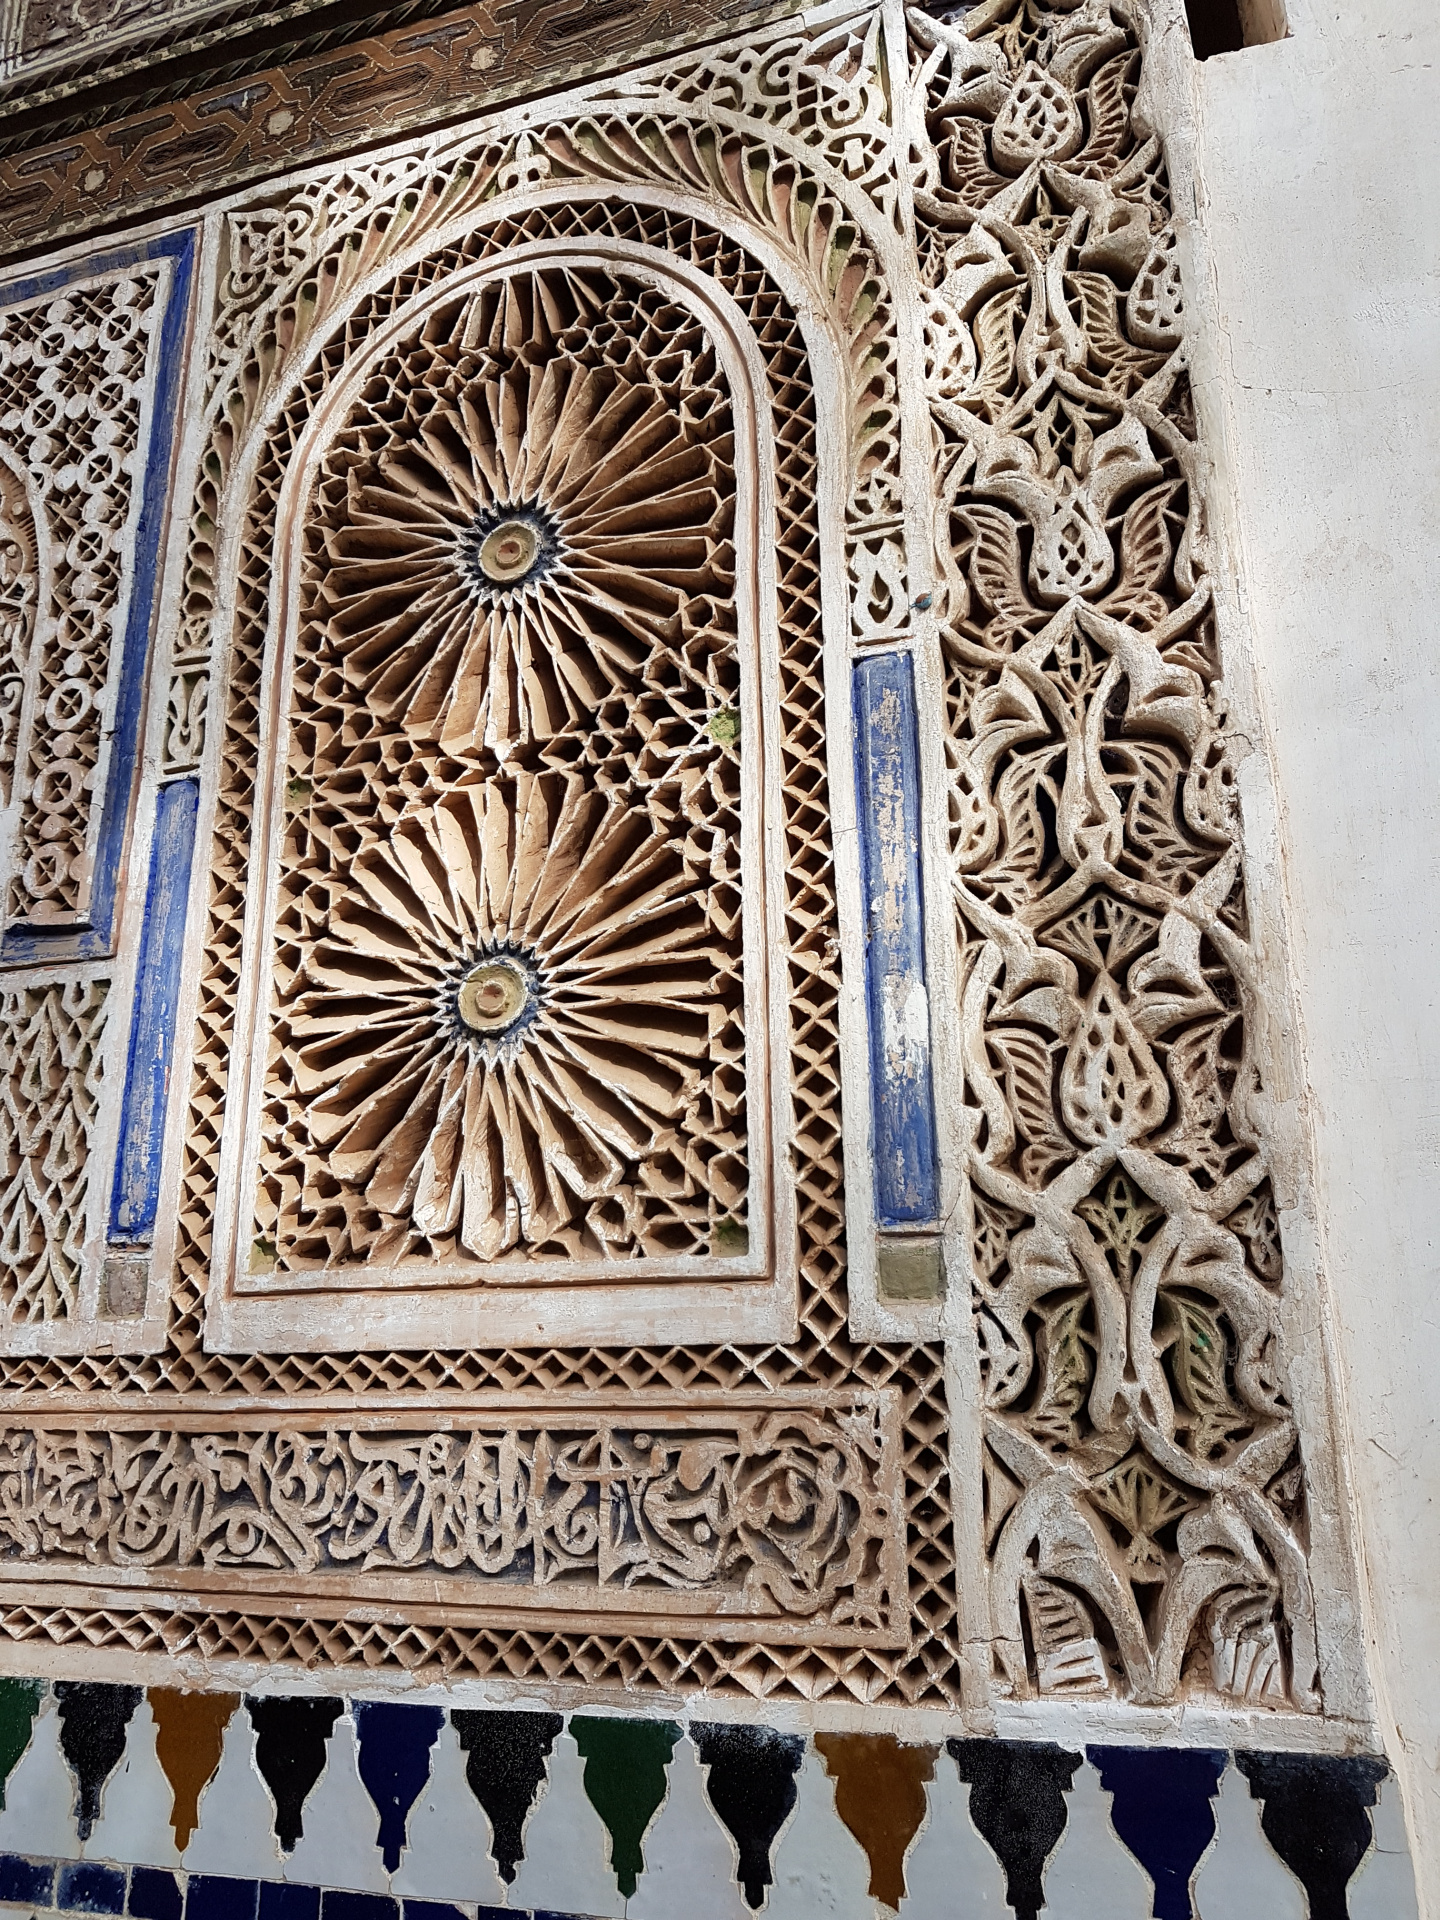 20180314-094602-Bahia_Palace-Marrakech-SJ-r.jpg